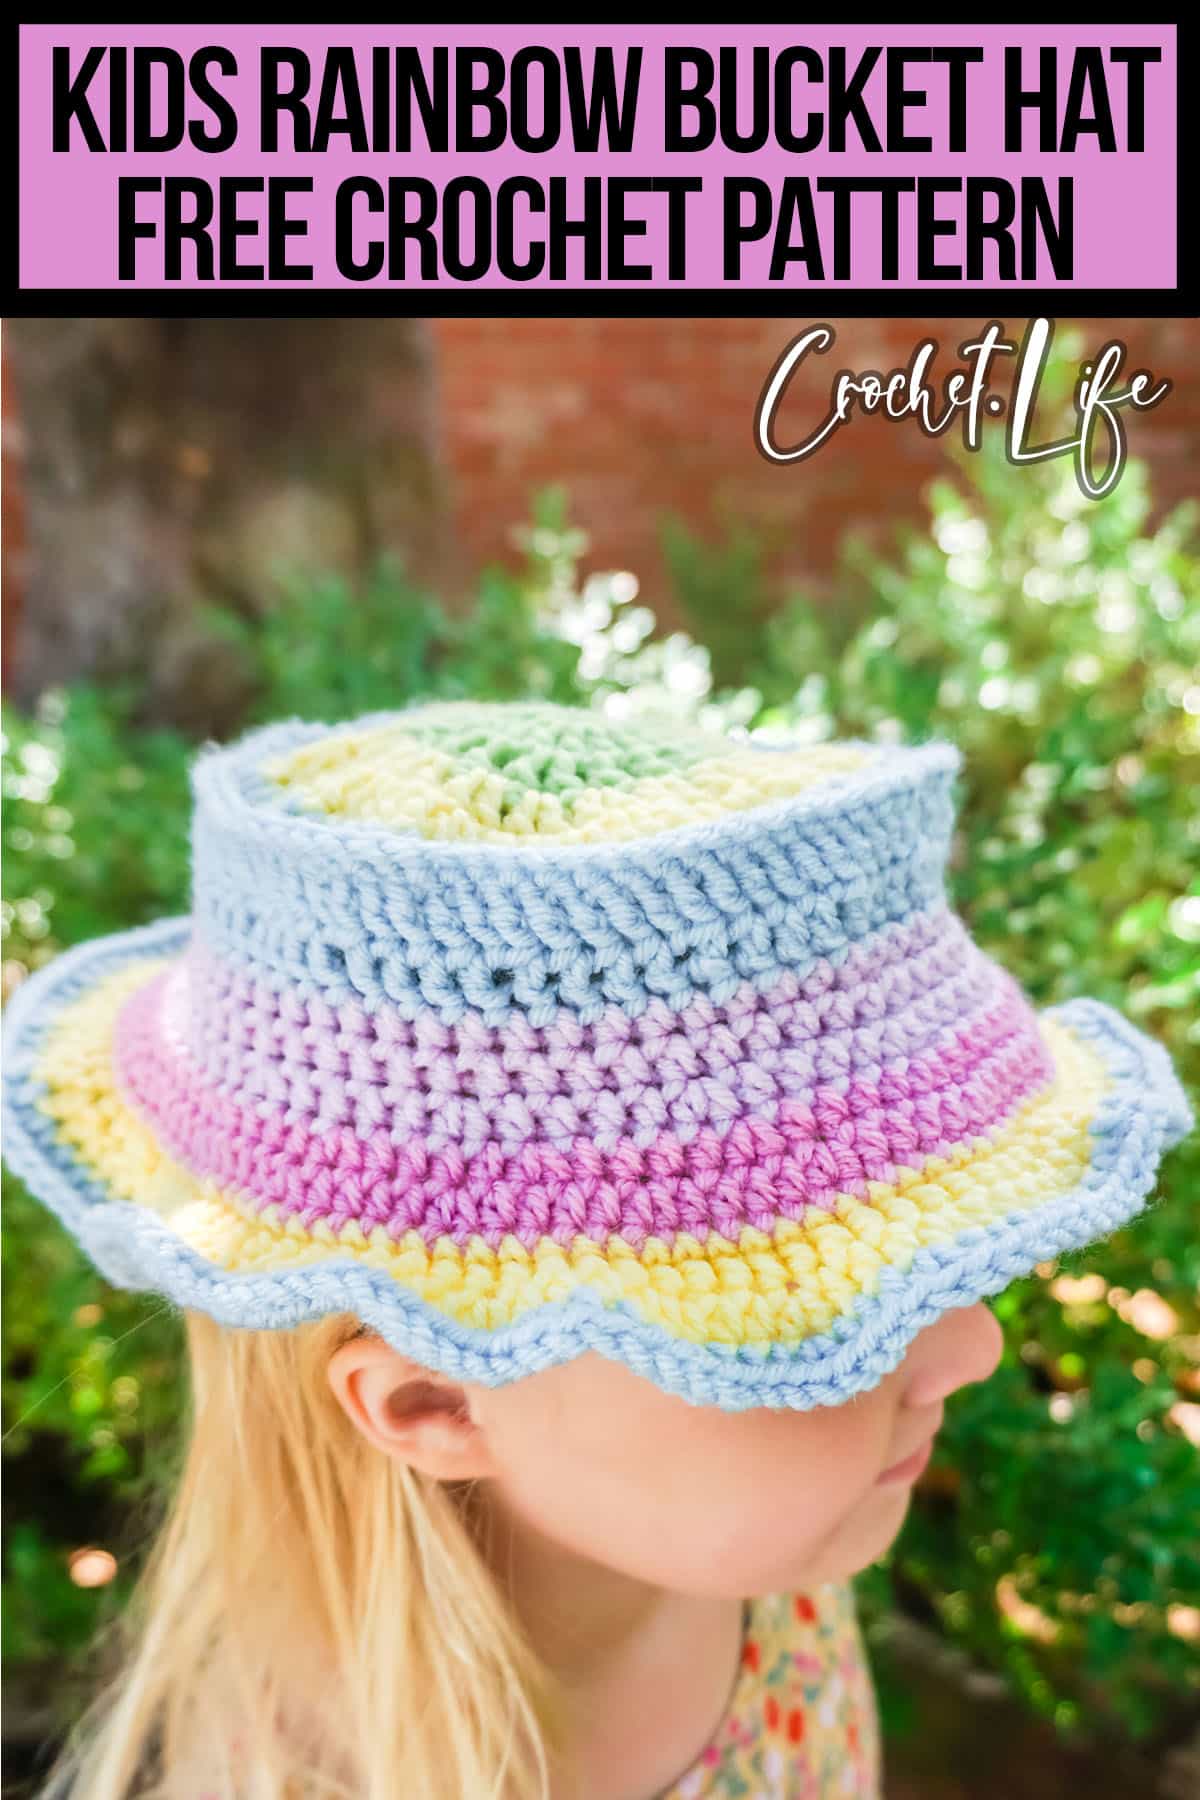 kids crocheted bucket hat pattern with text which reads kids rainbow bucket hat free crochet pattern